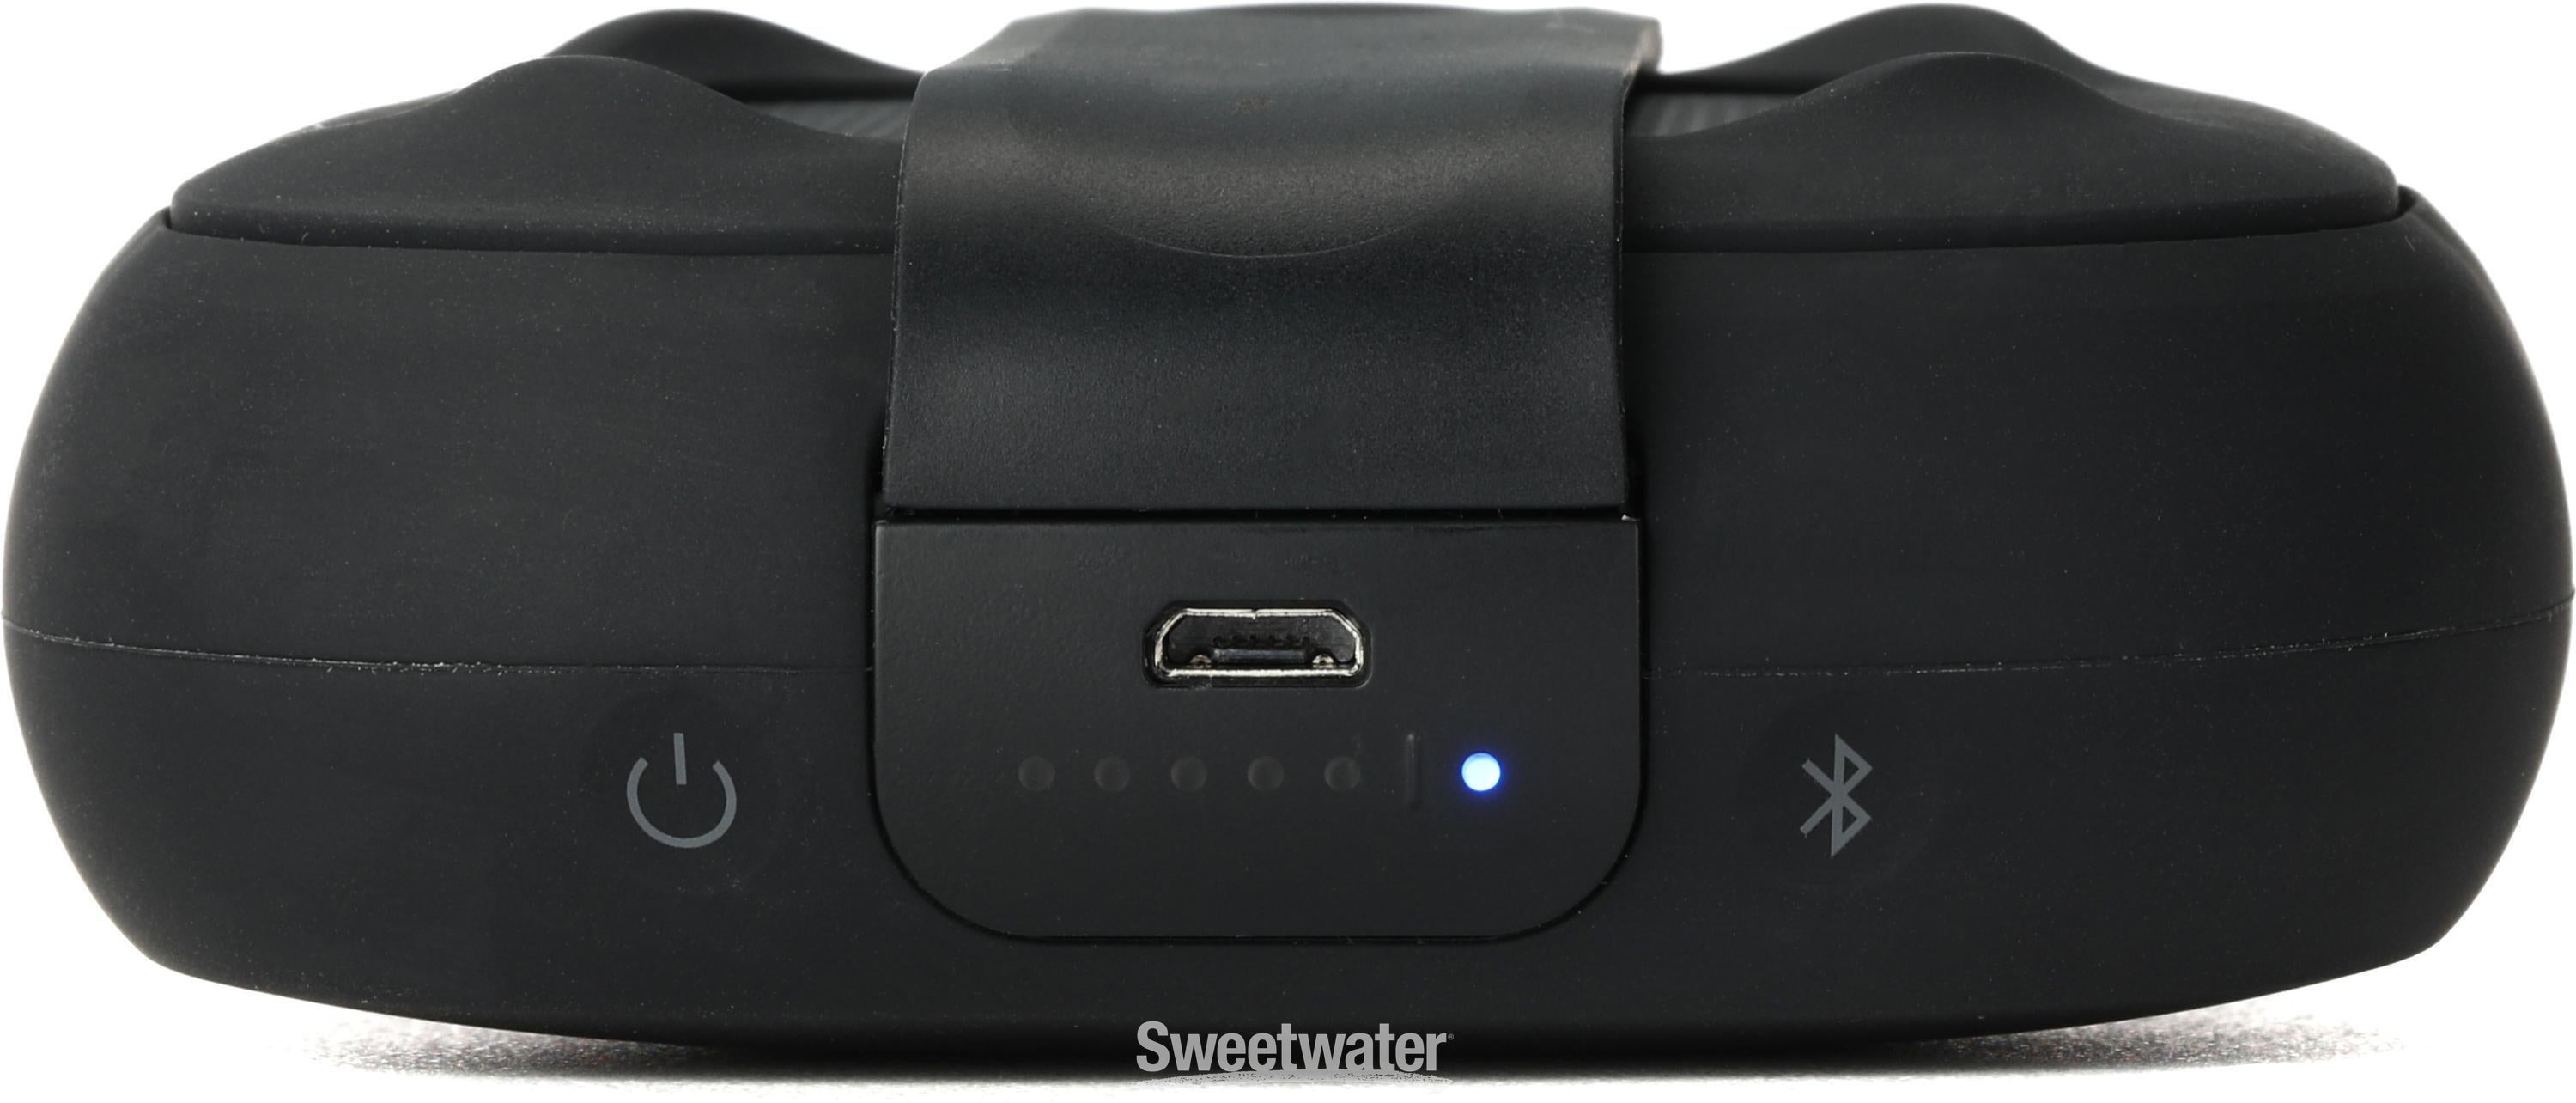 Bose SoundLink Micro Bluetooth Speaker - Black Reviews | Sweetwater